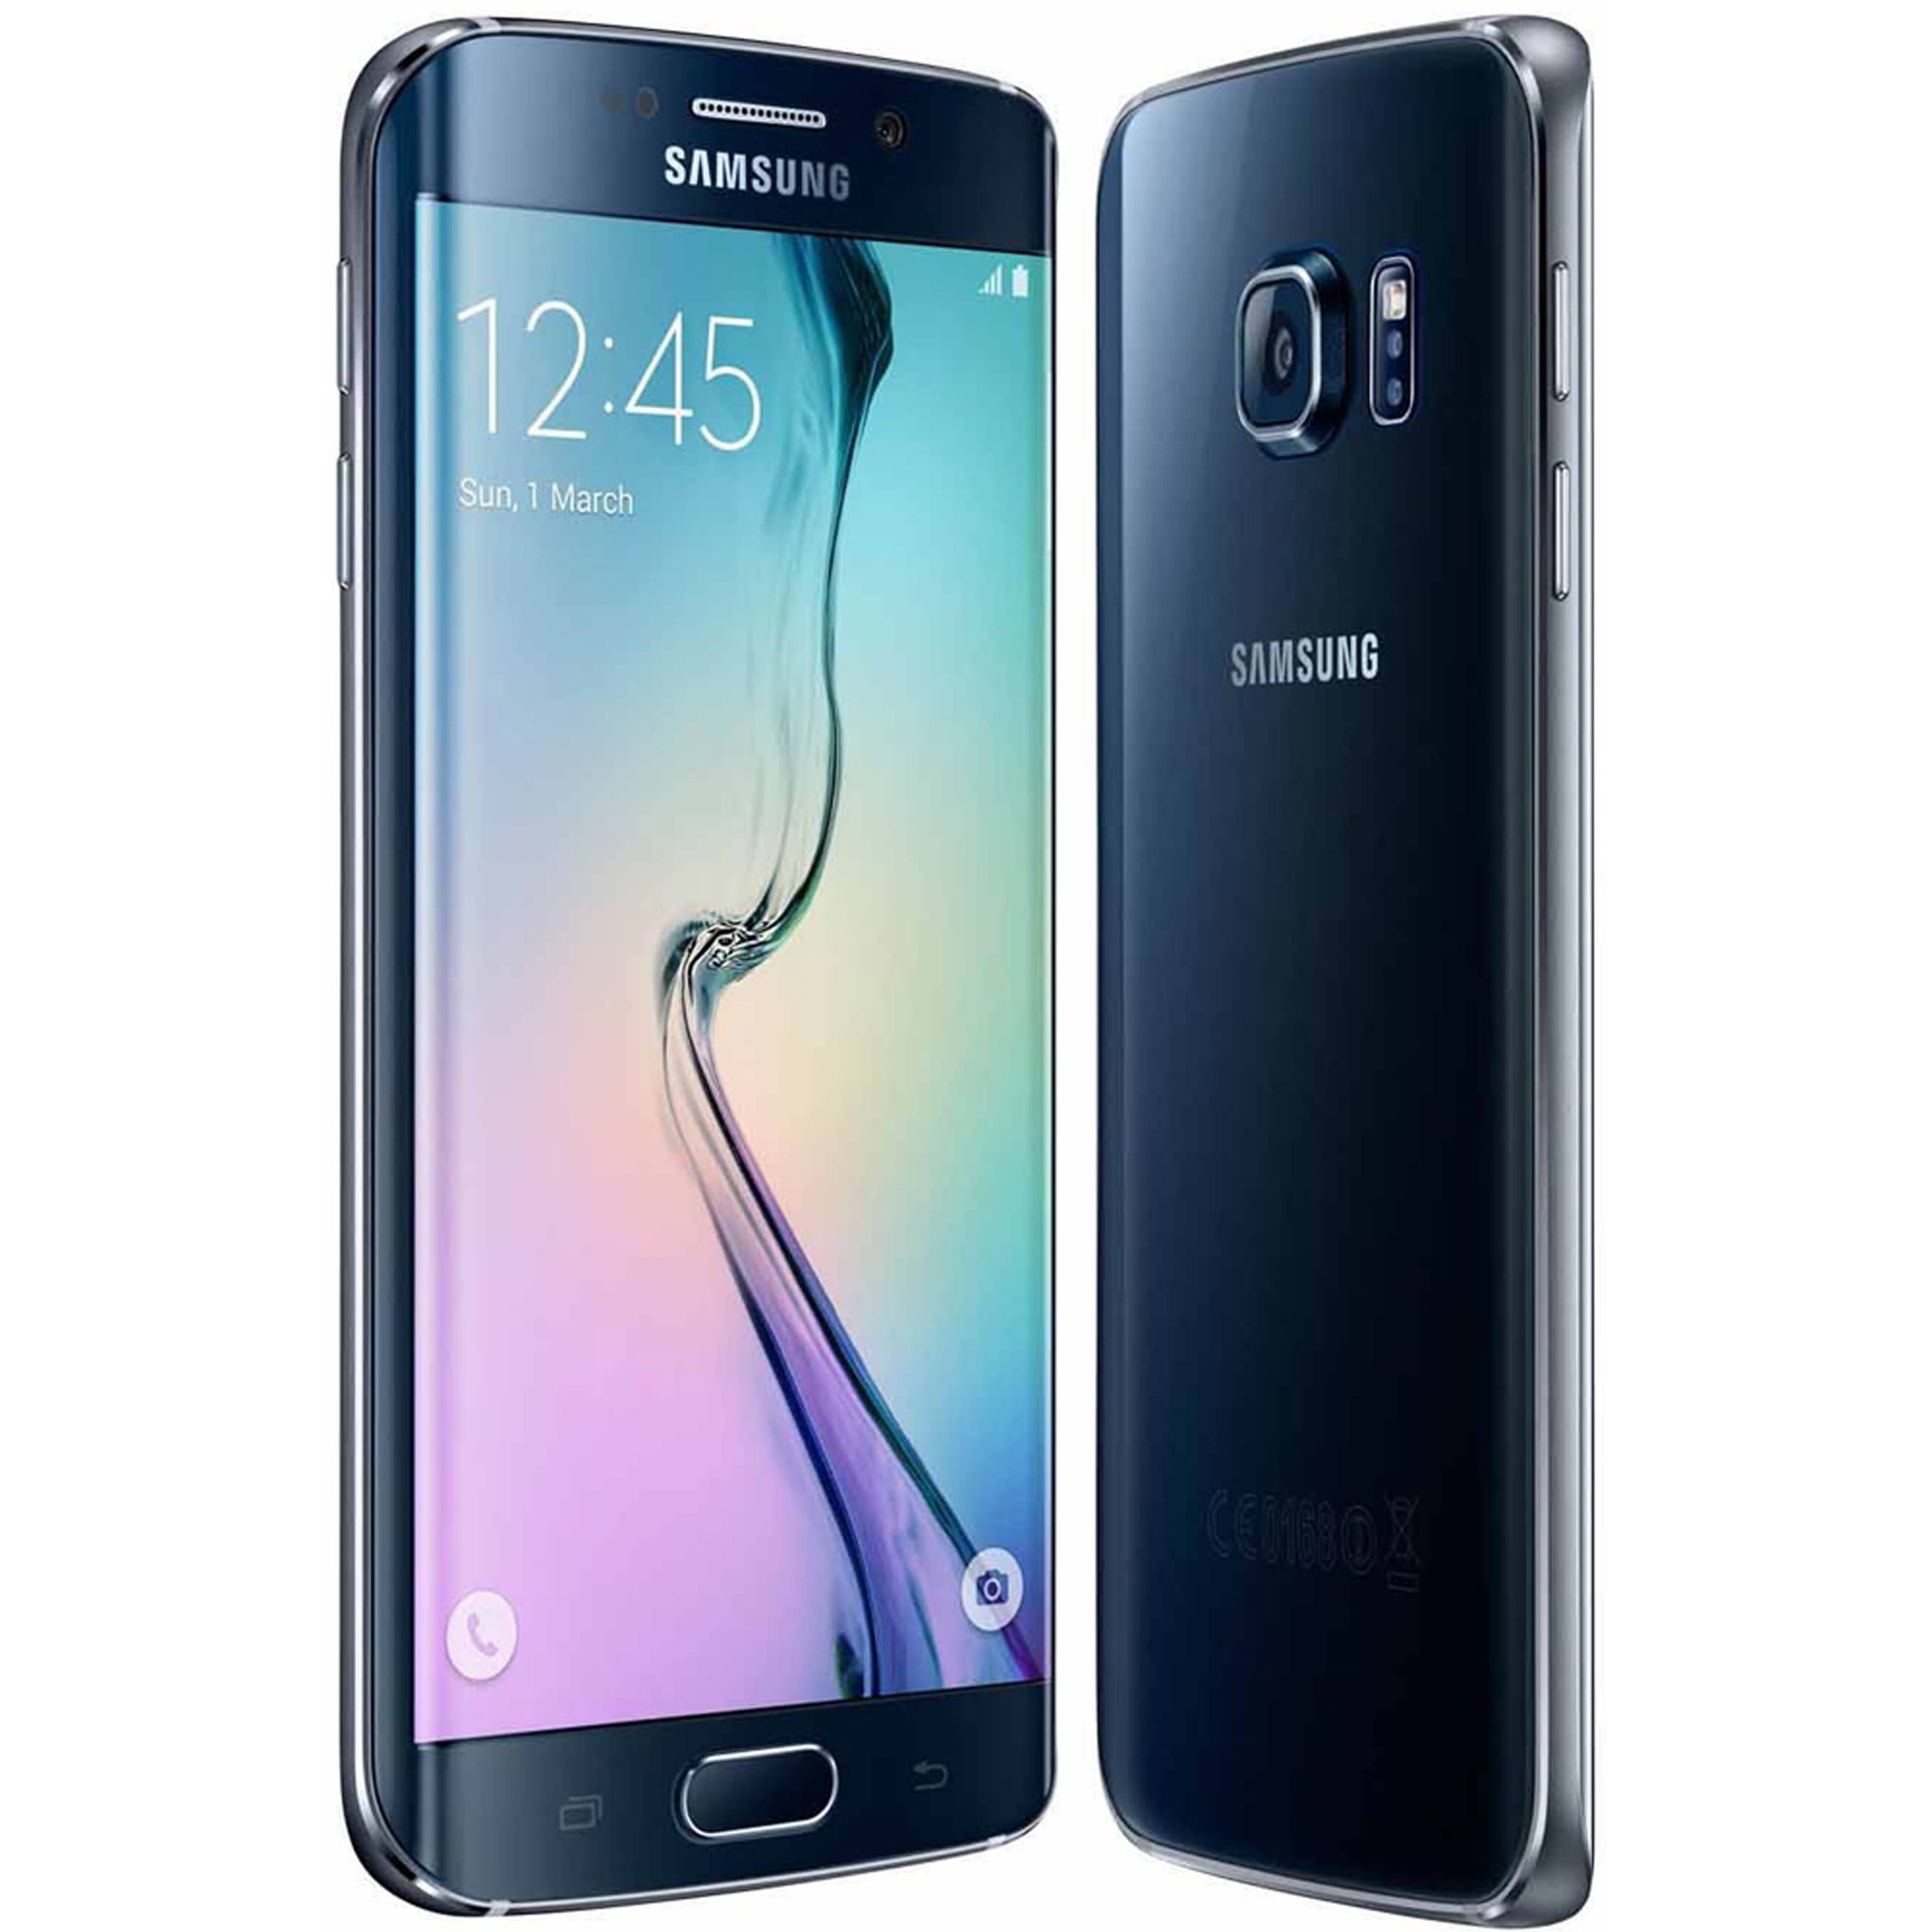 Samsung Galaxy S6 edge G925 64GB 4G LTE Octa-Core Smartphone GSM 